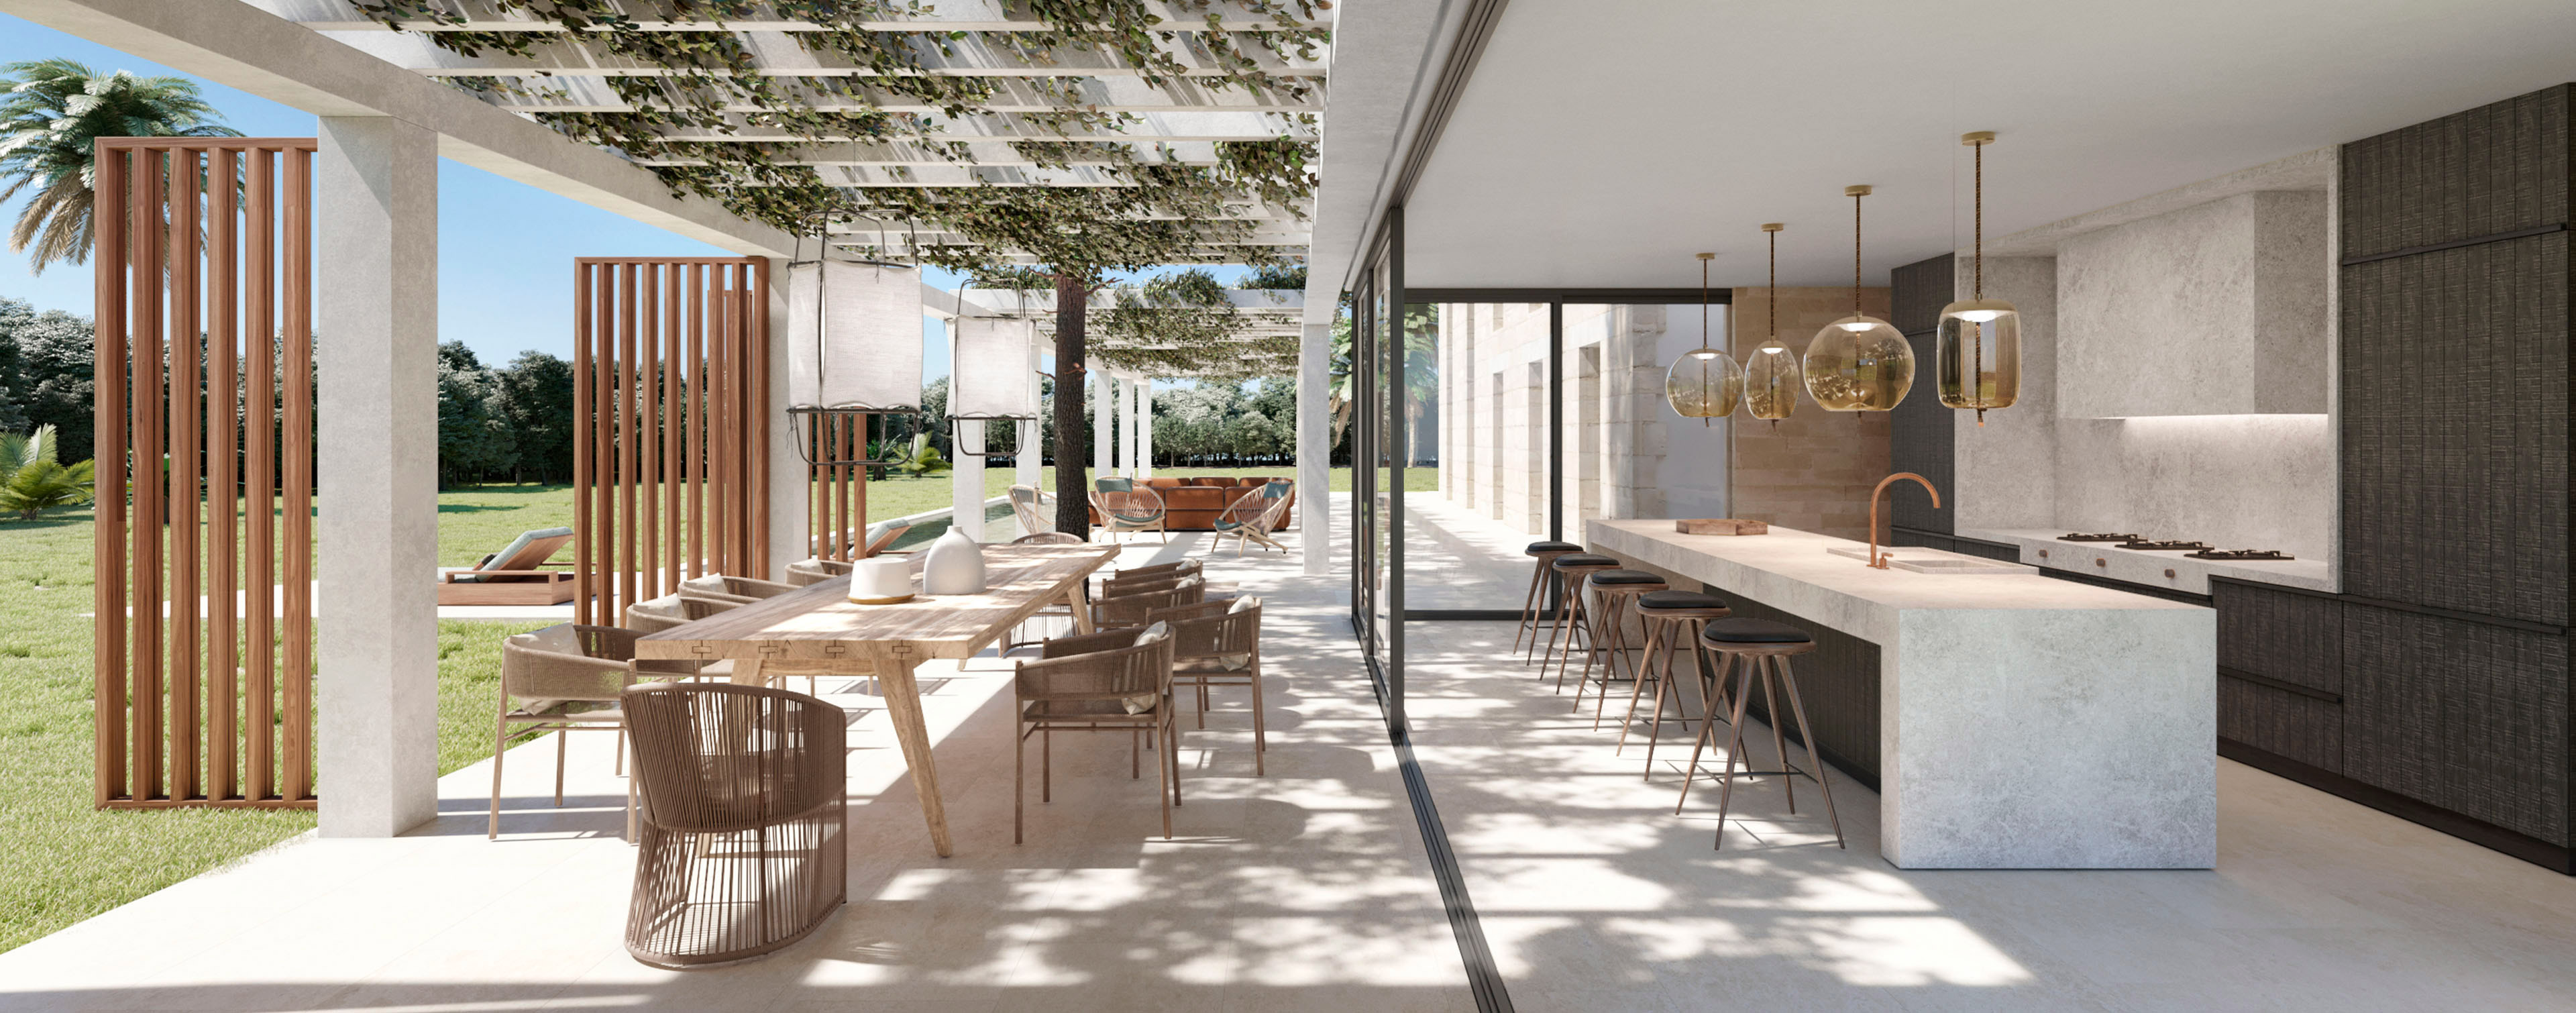 luv studio luxury architects menorca sa vigia house IMG 01 - LUV Studio - Architecture & Design - Barcelona